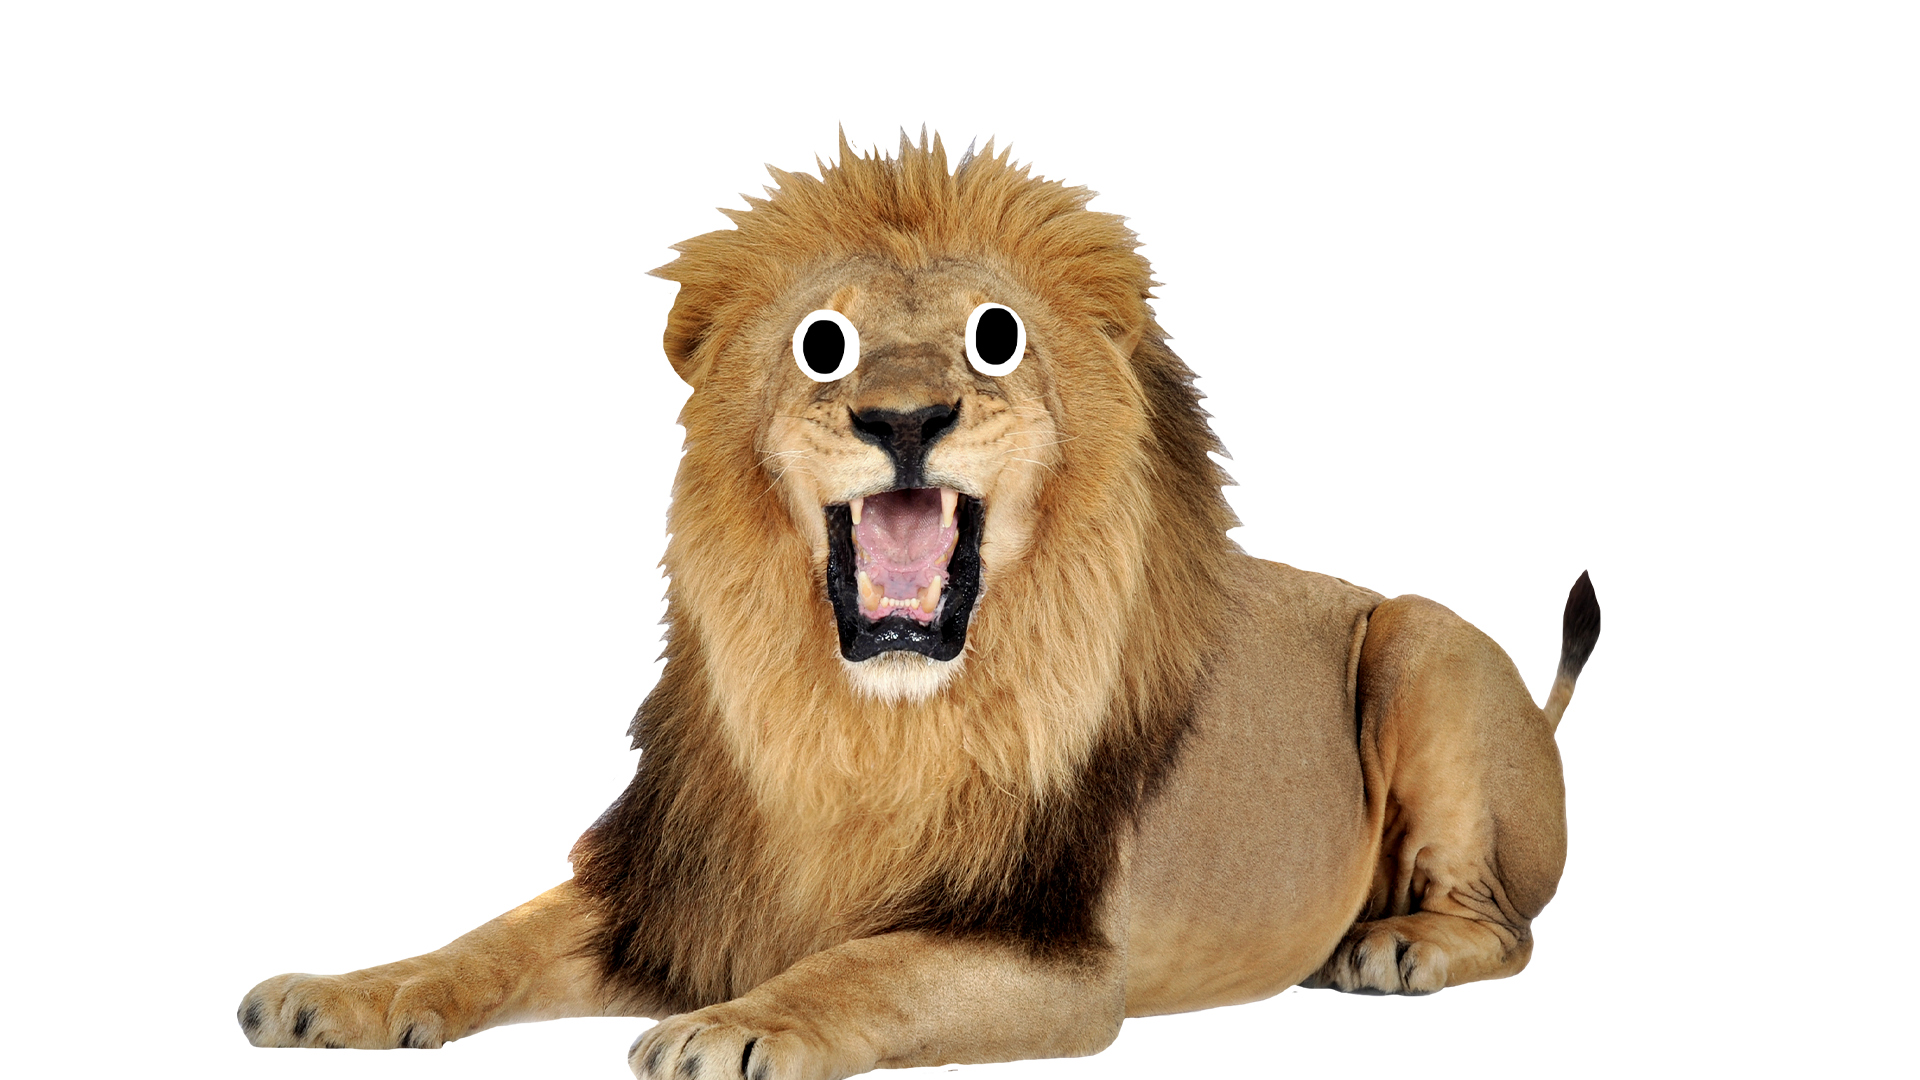 A roaring lion